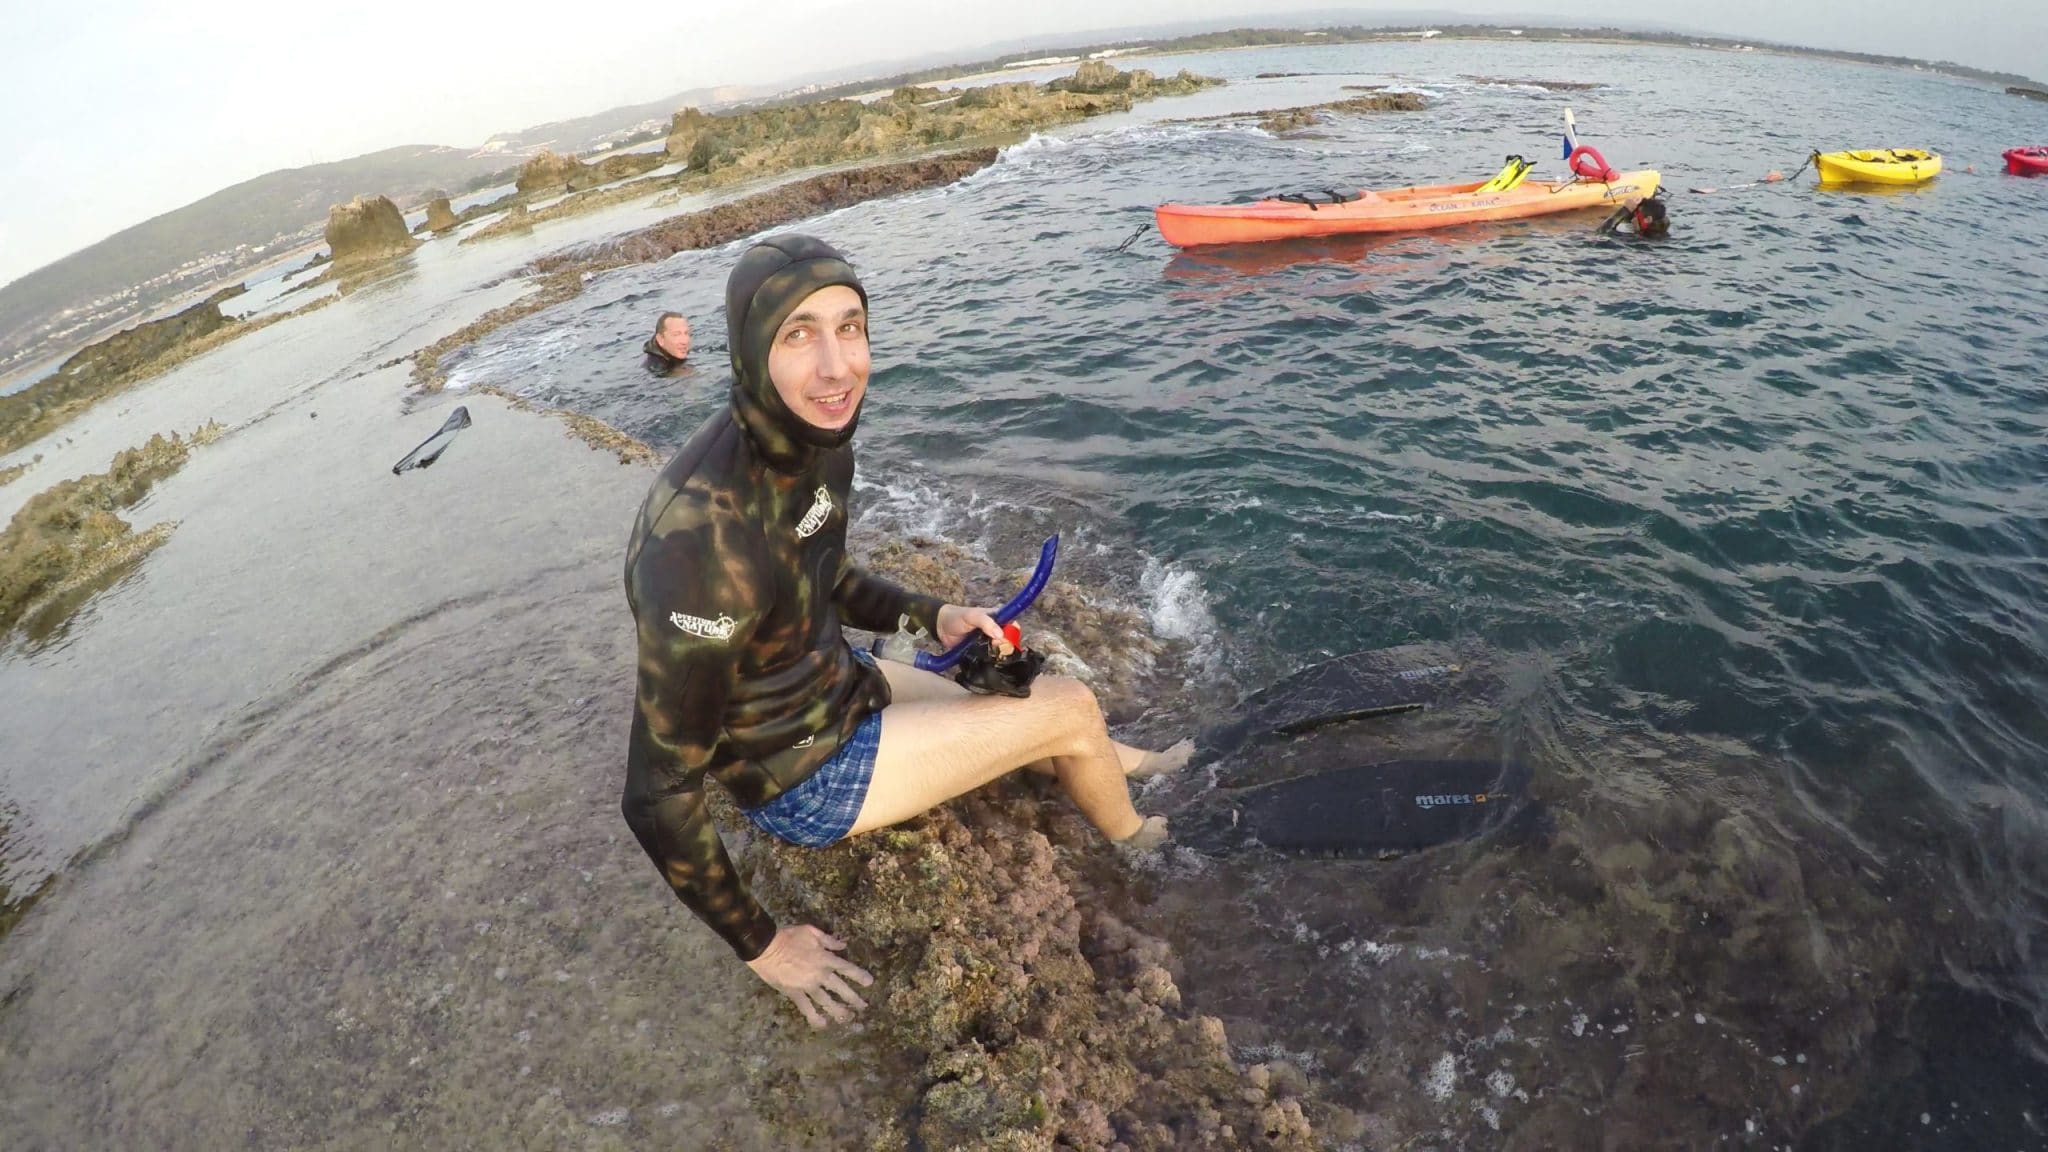 A snorkeler on an abrasion platform. Photo: Andrey Aharonov.